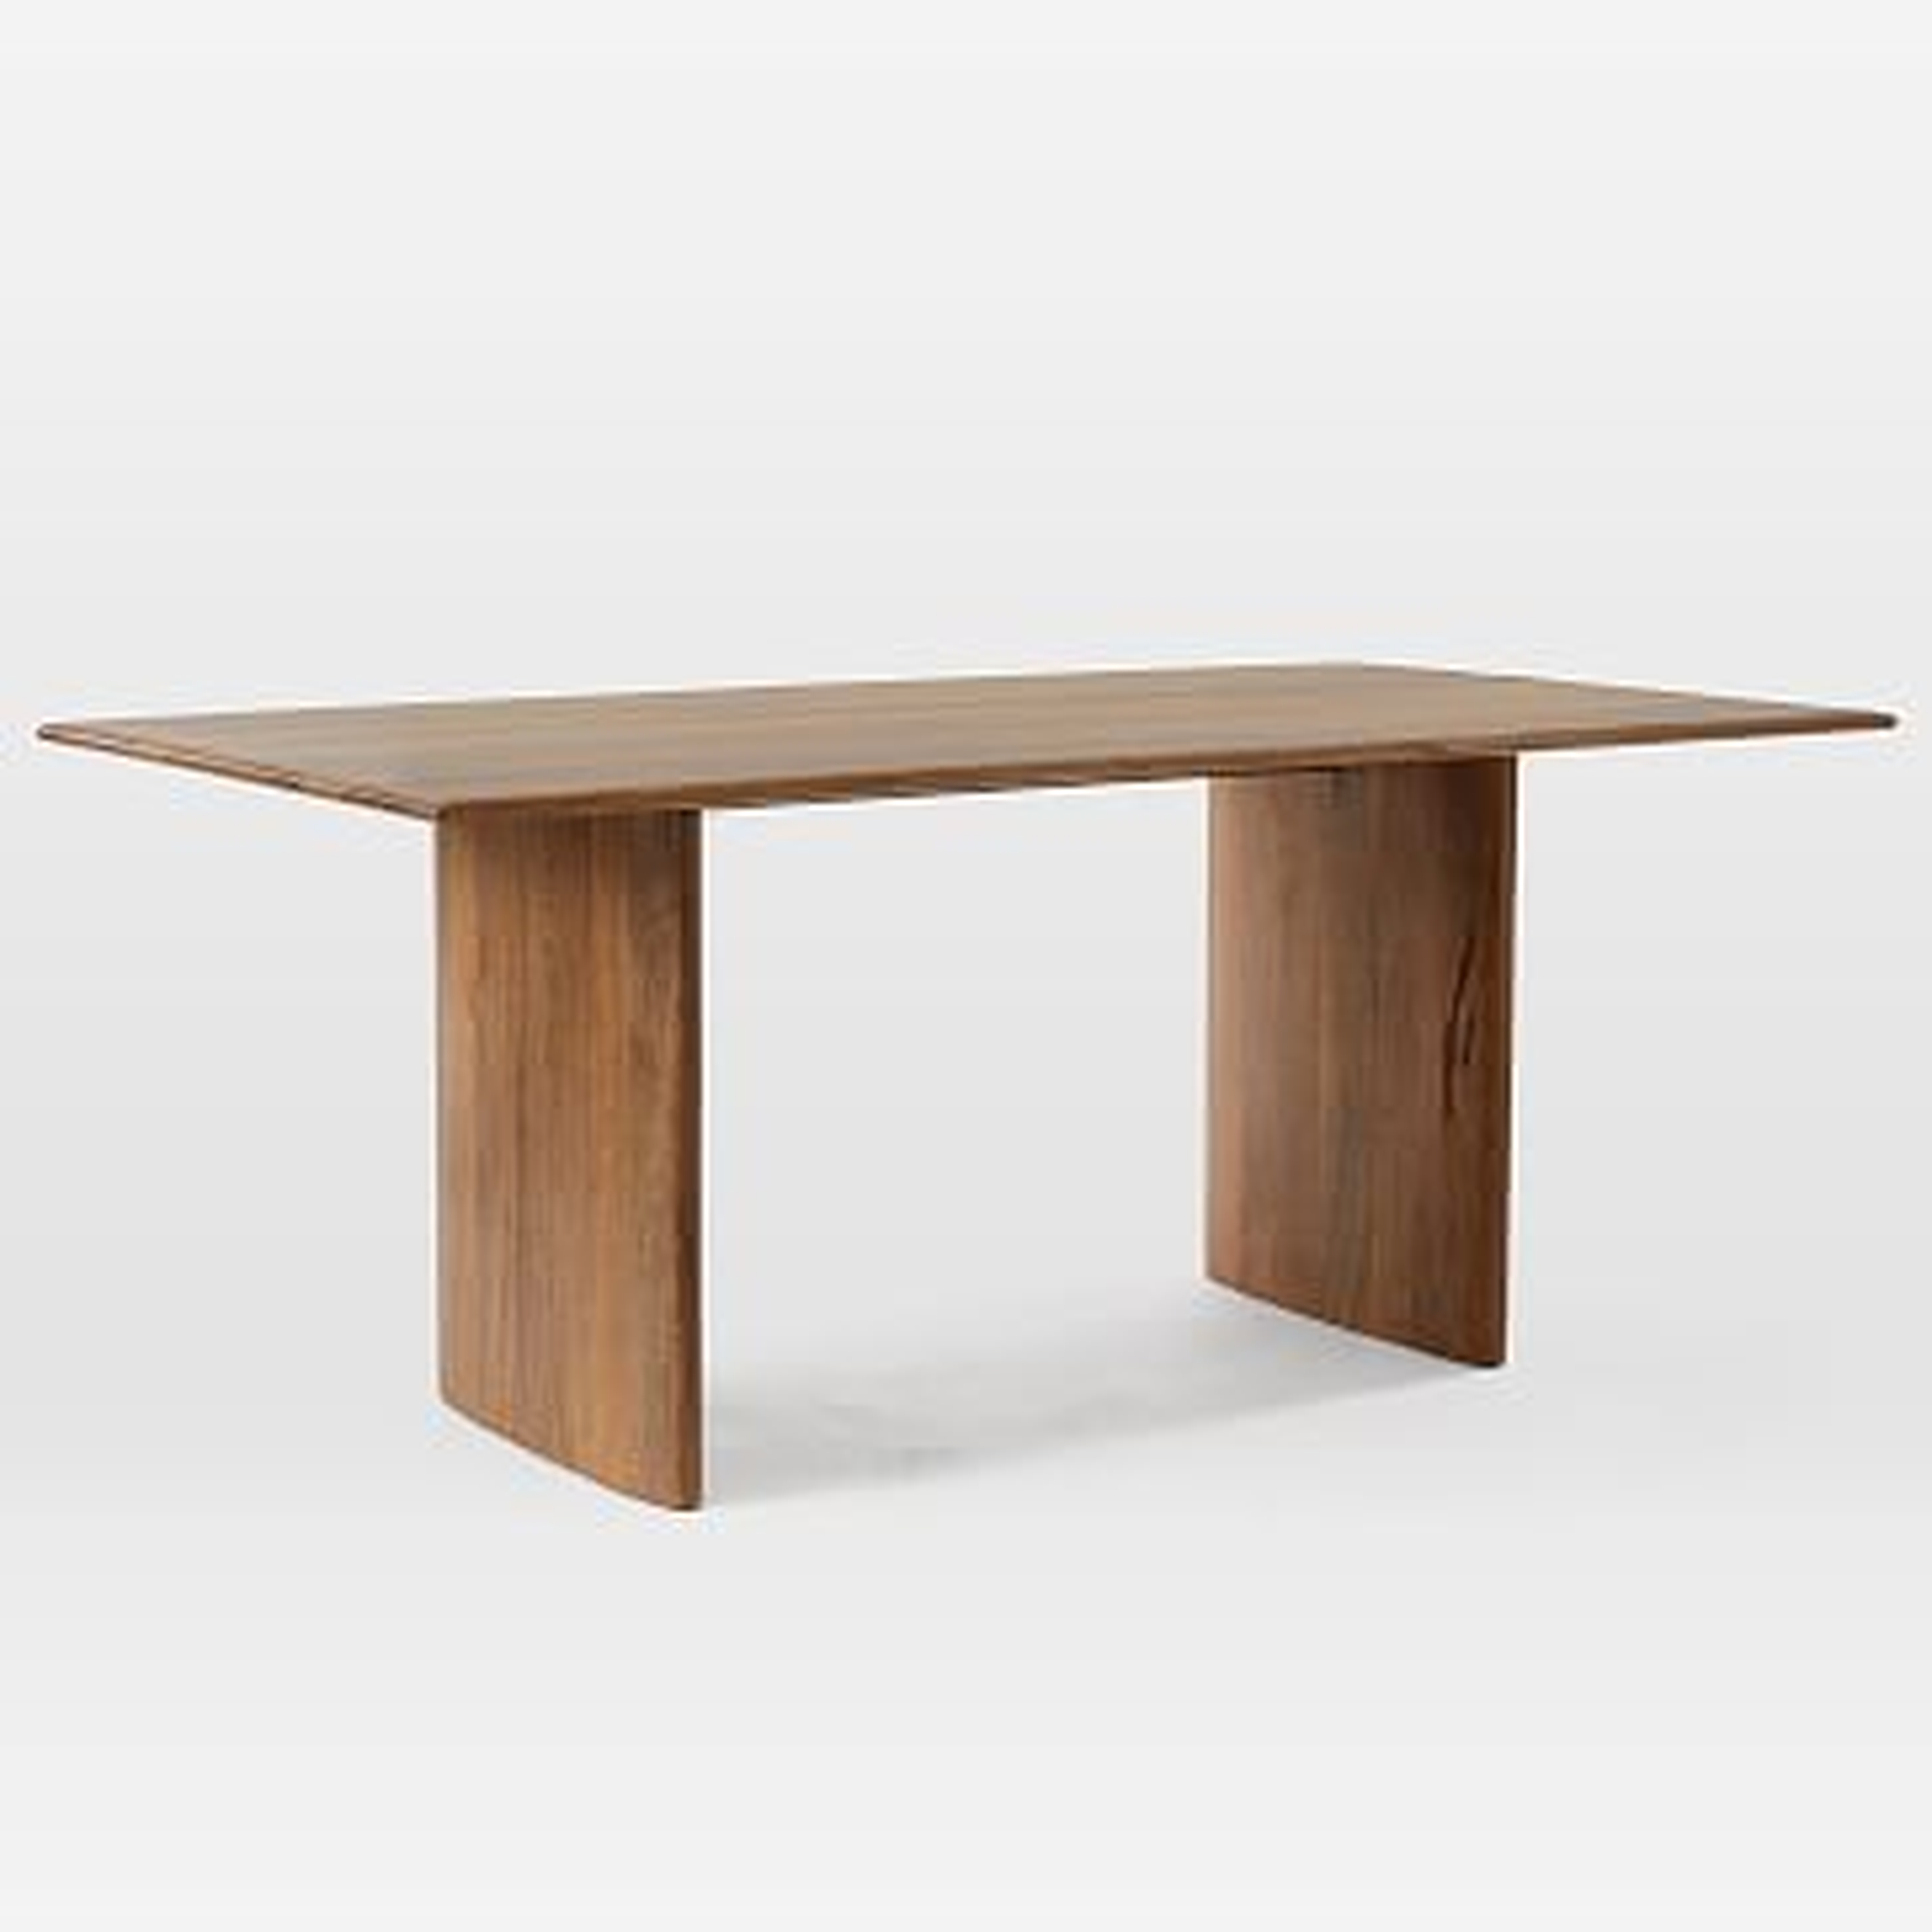 Anton Solid Wood Dining Table, 72", Burnt Wax - West Elm